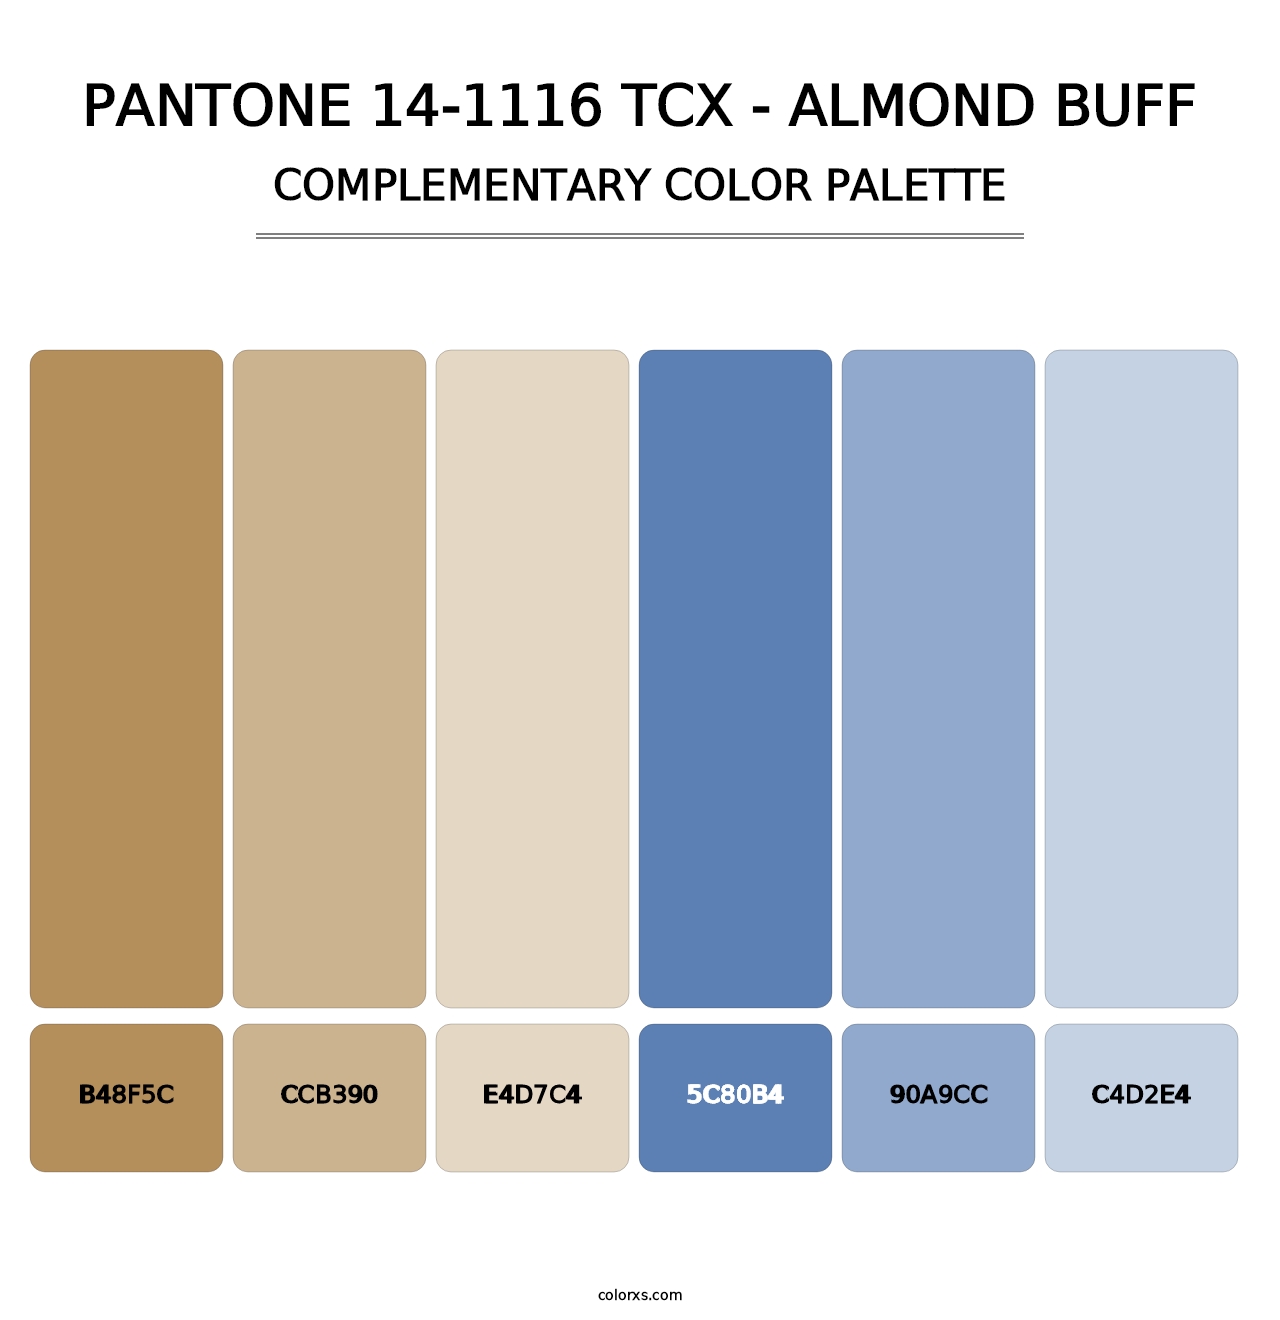 PANTONE 14-1116 TCX - Almond Buff - Complementary Color Palette